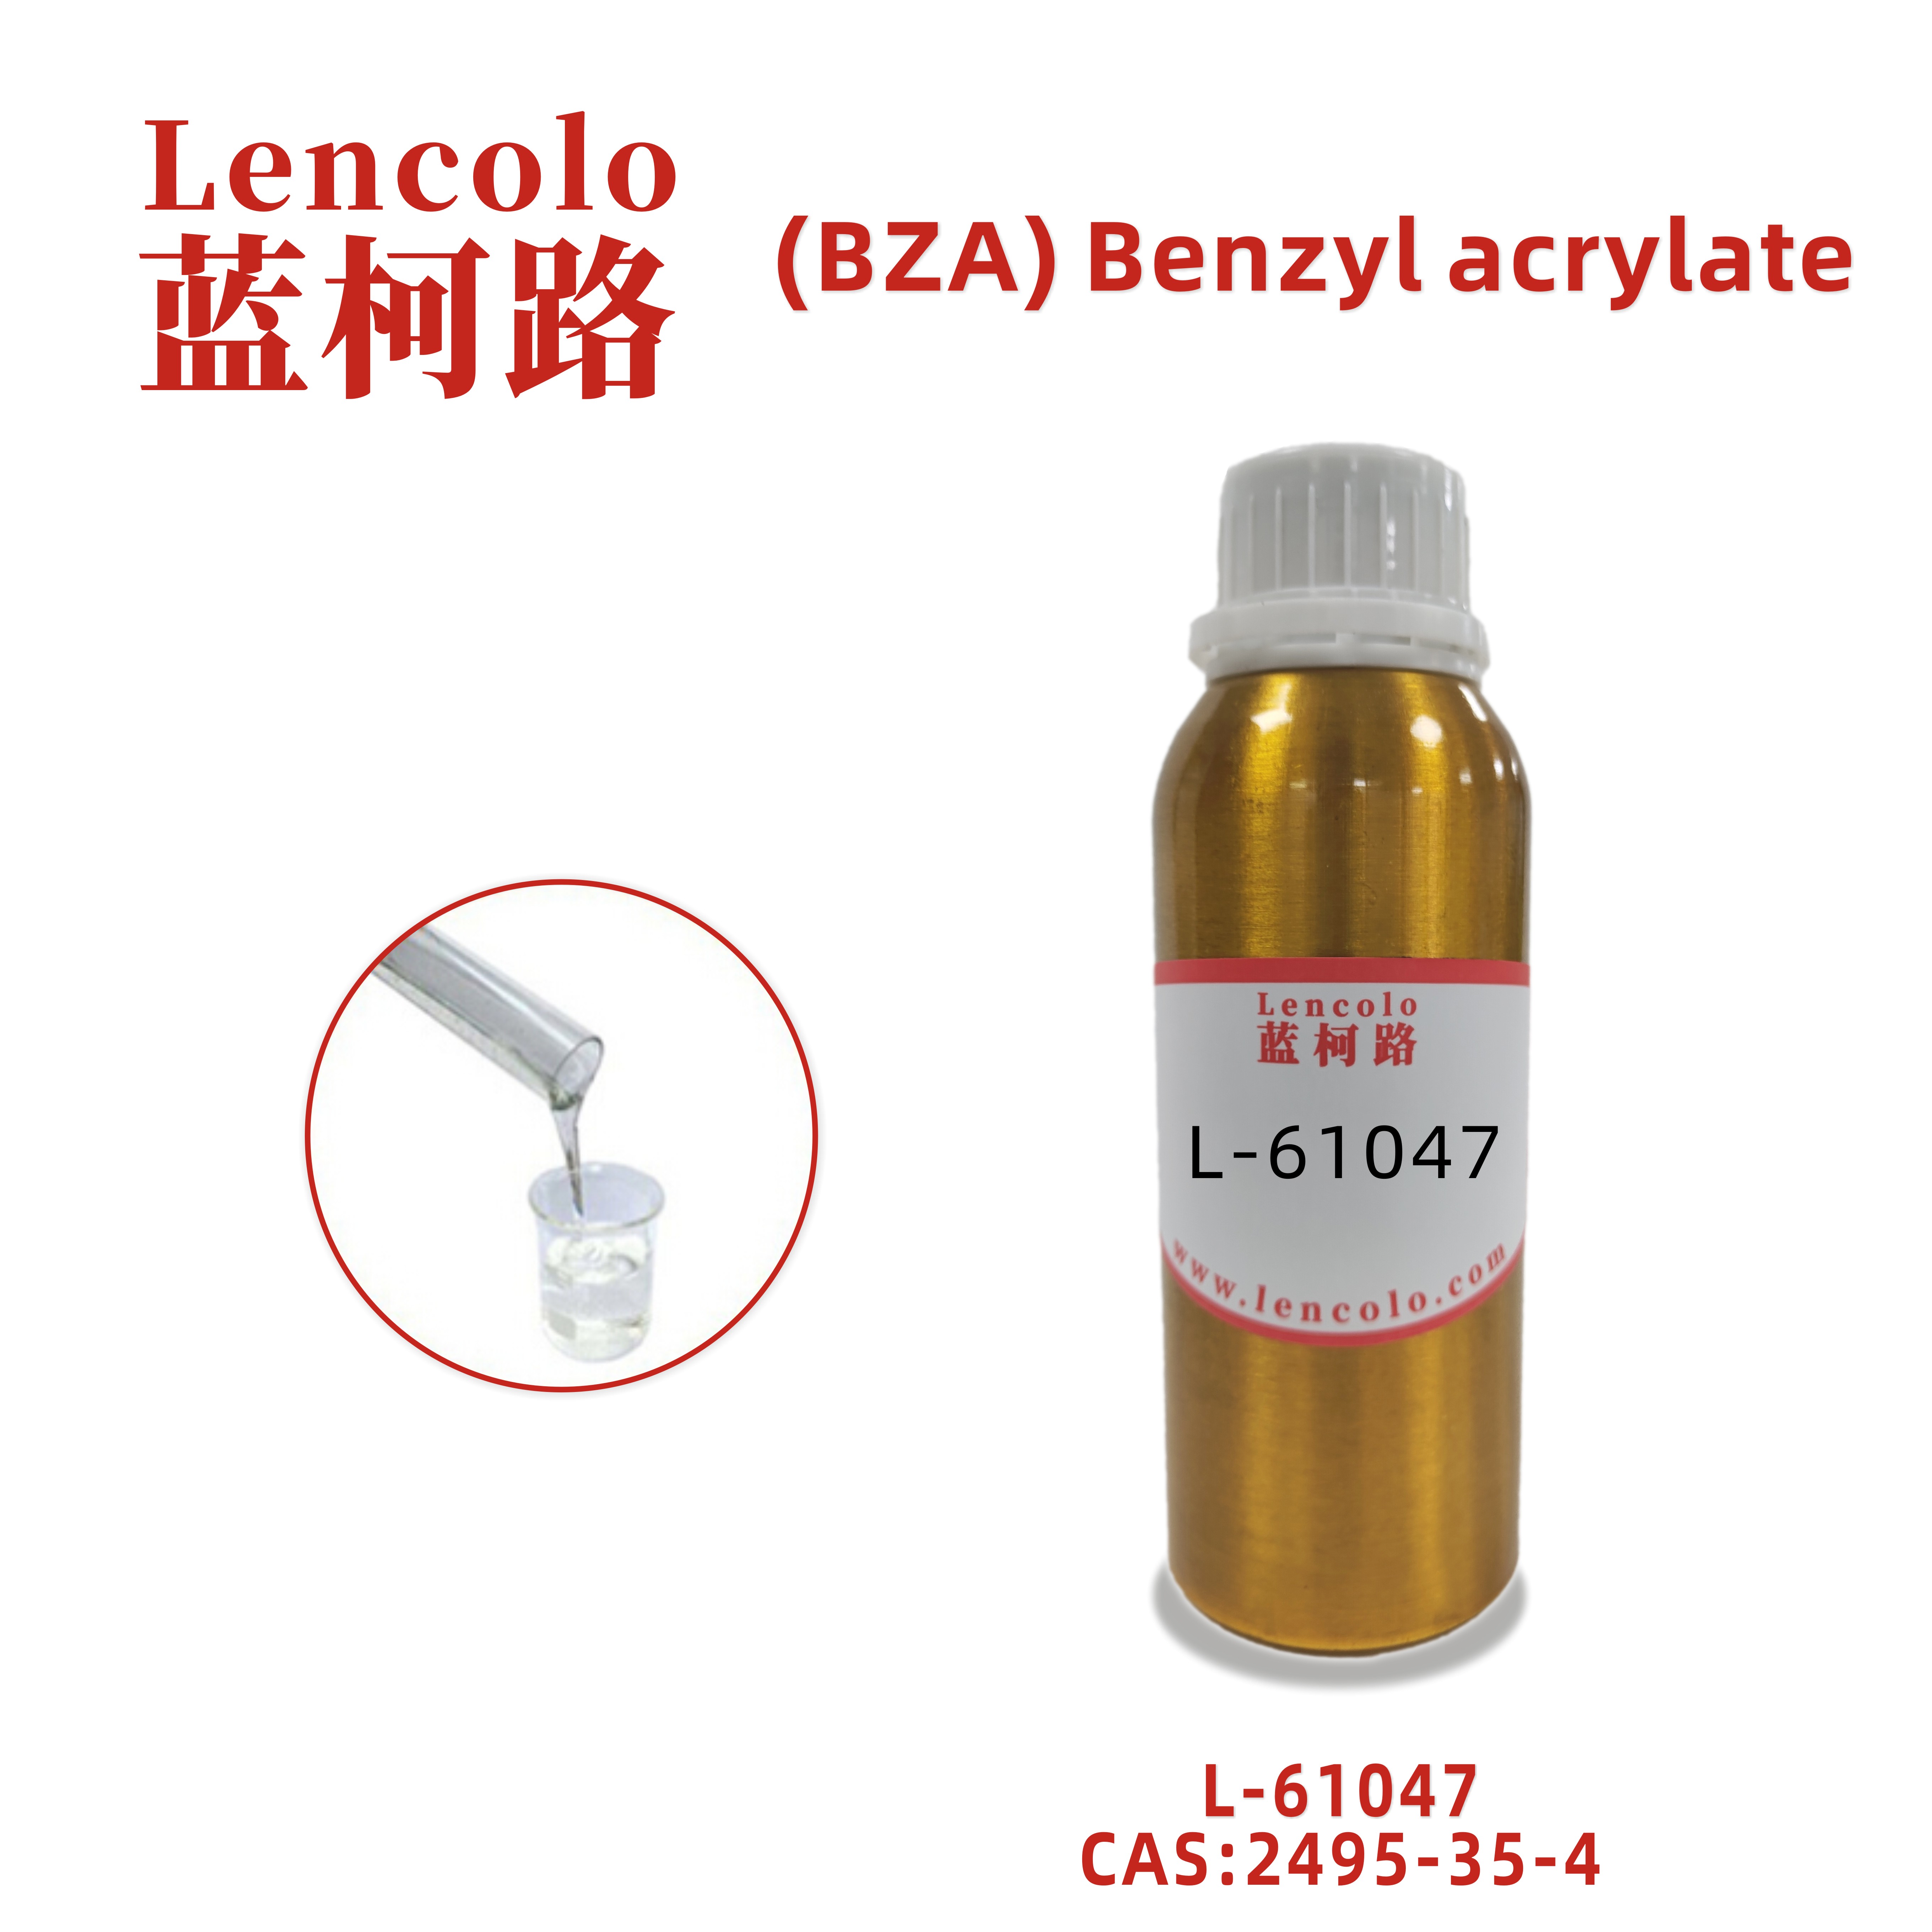 L-61047 (BZA) Benzyl acrylate